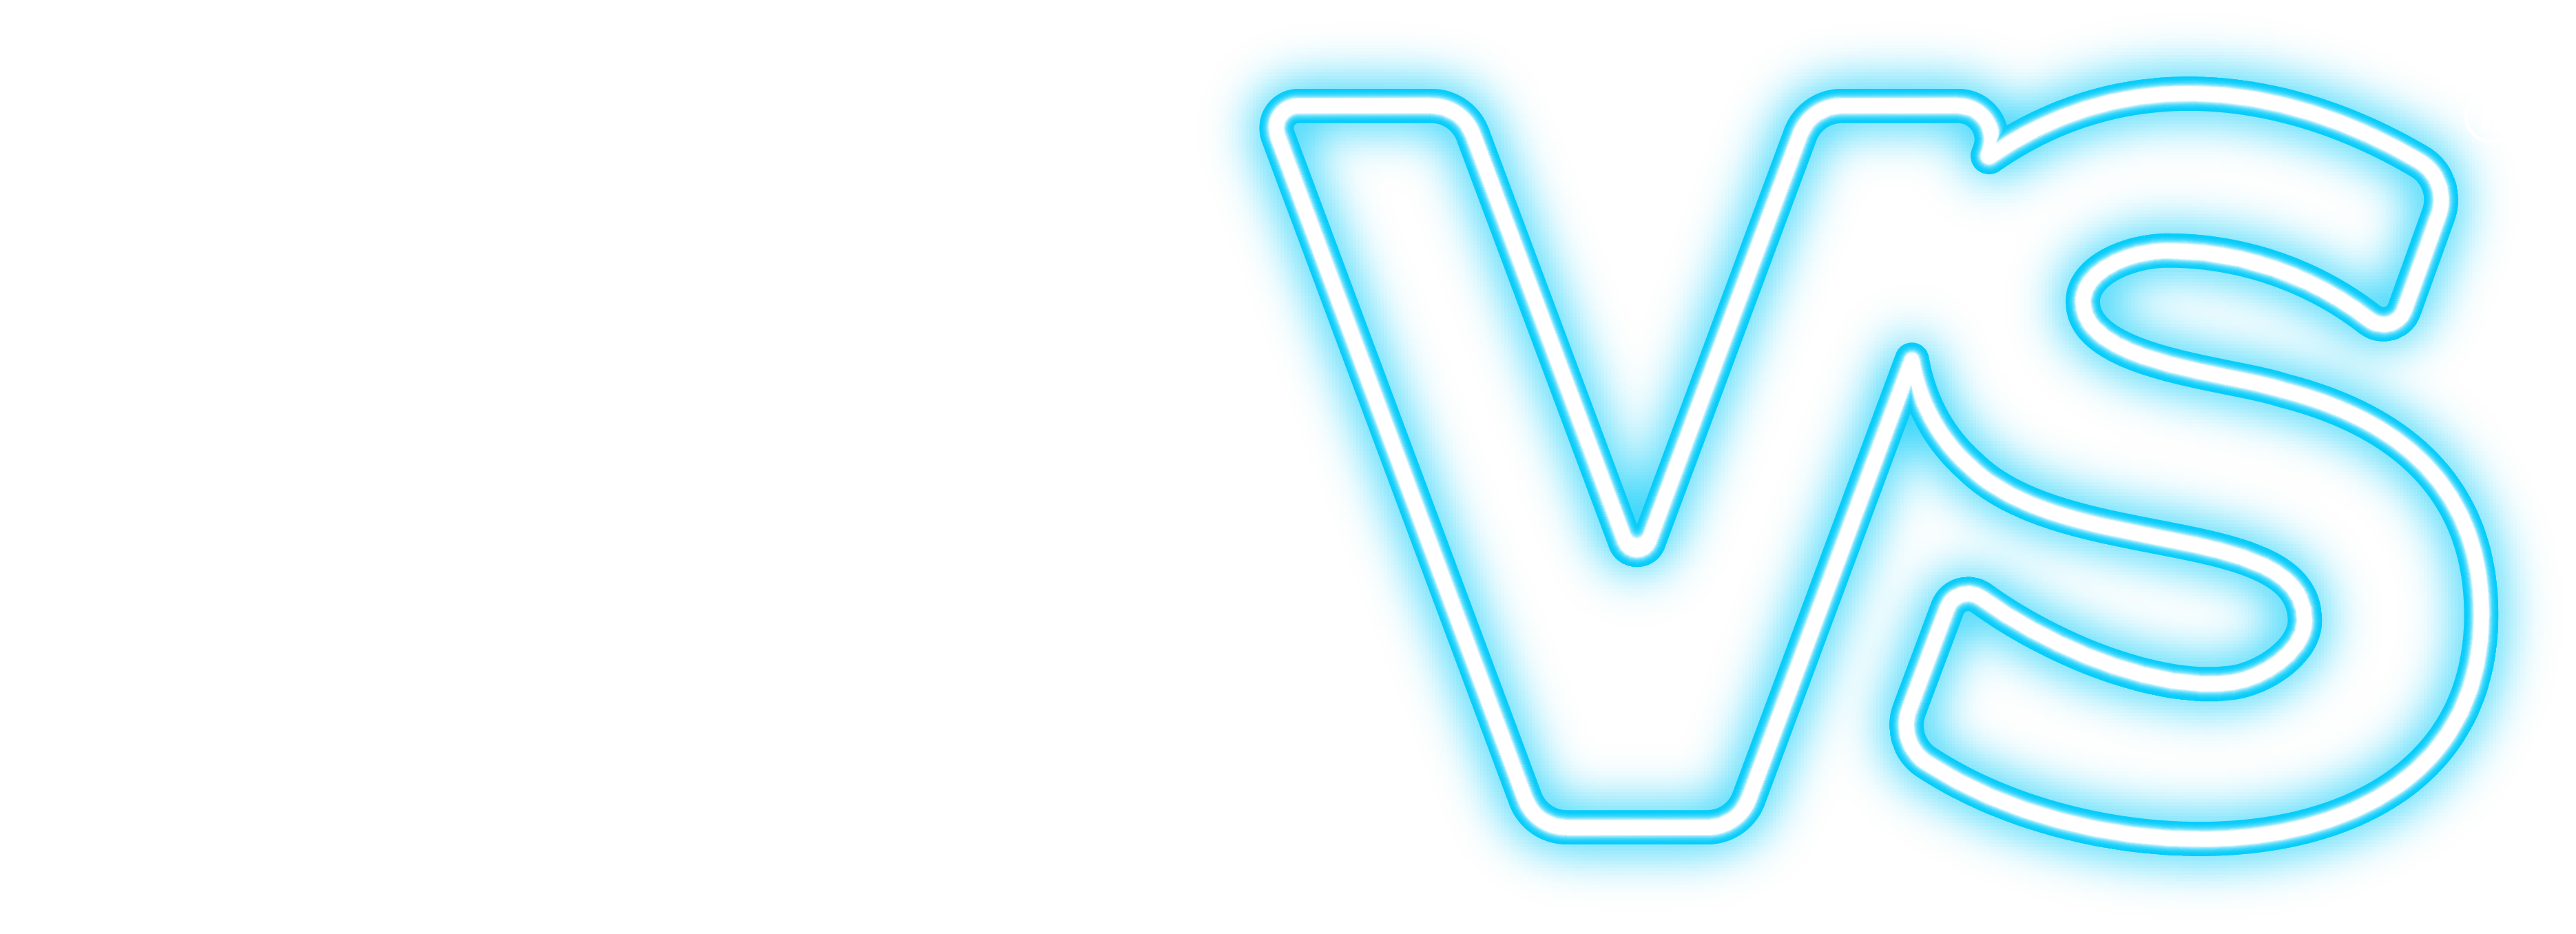 SickKids Logo and SickKids VS Versus logo